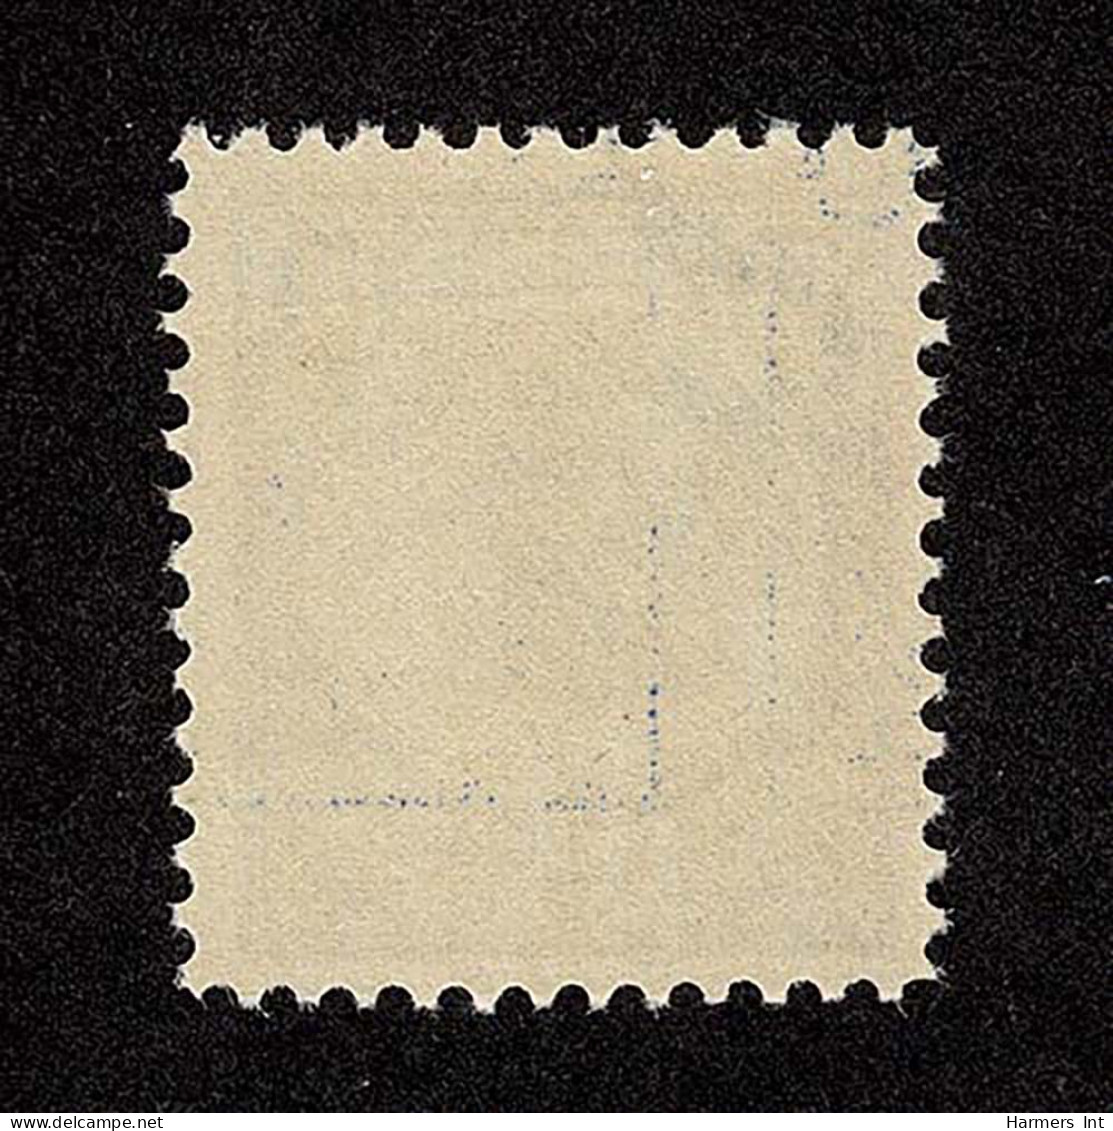 Lot # 070 Registry, 1911, 10¢ Ultramarine - Colis